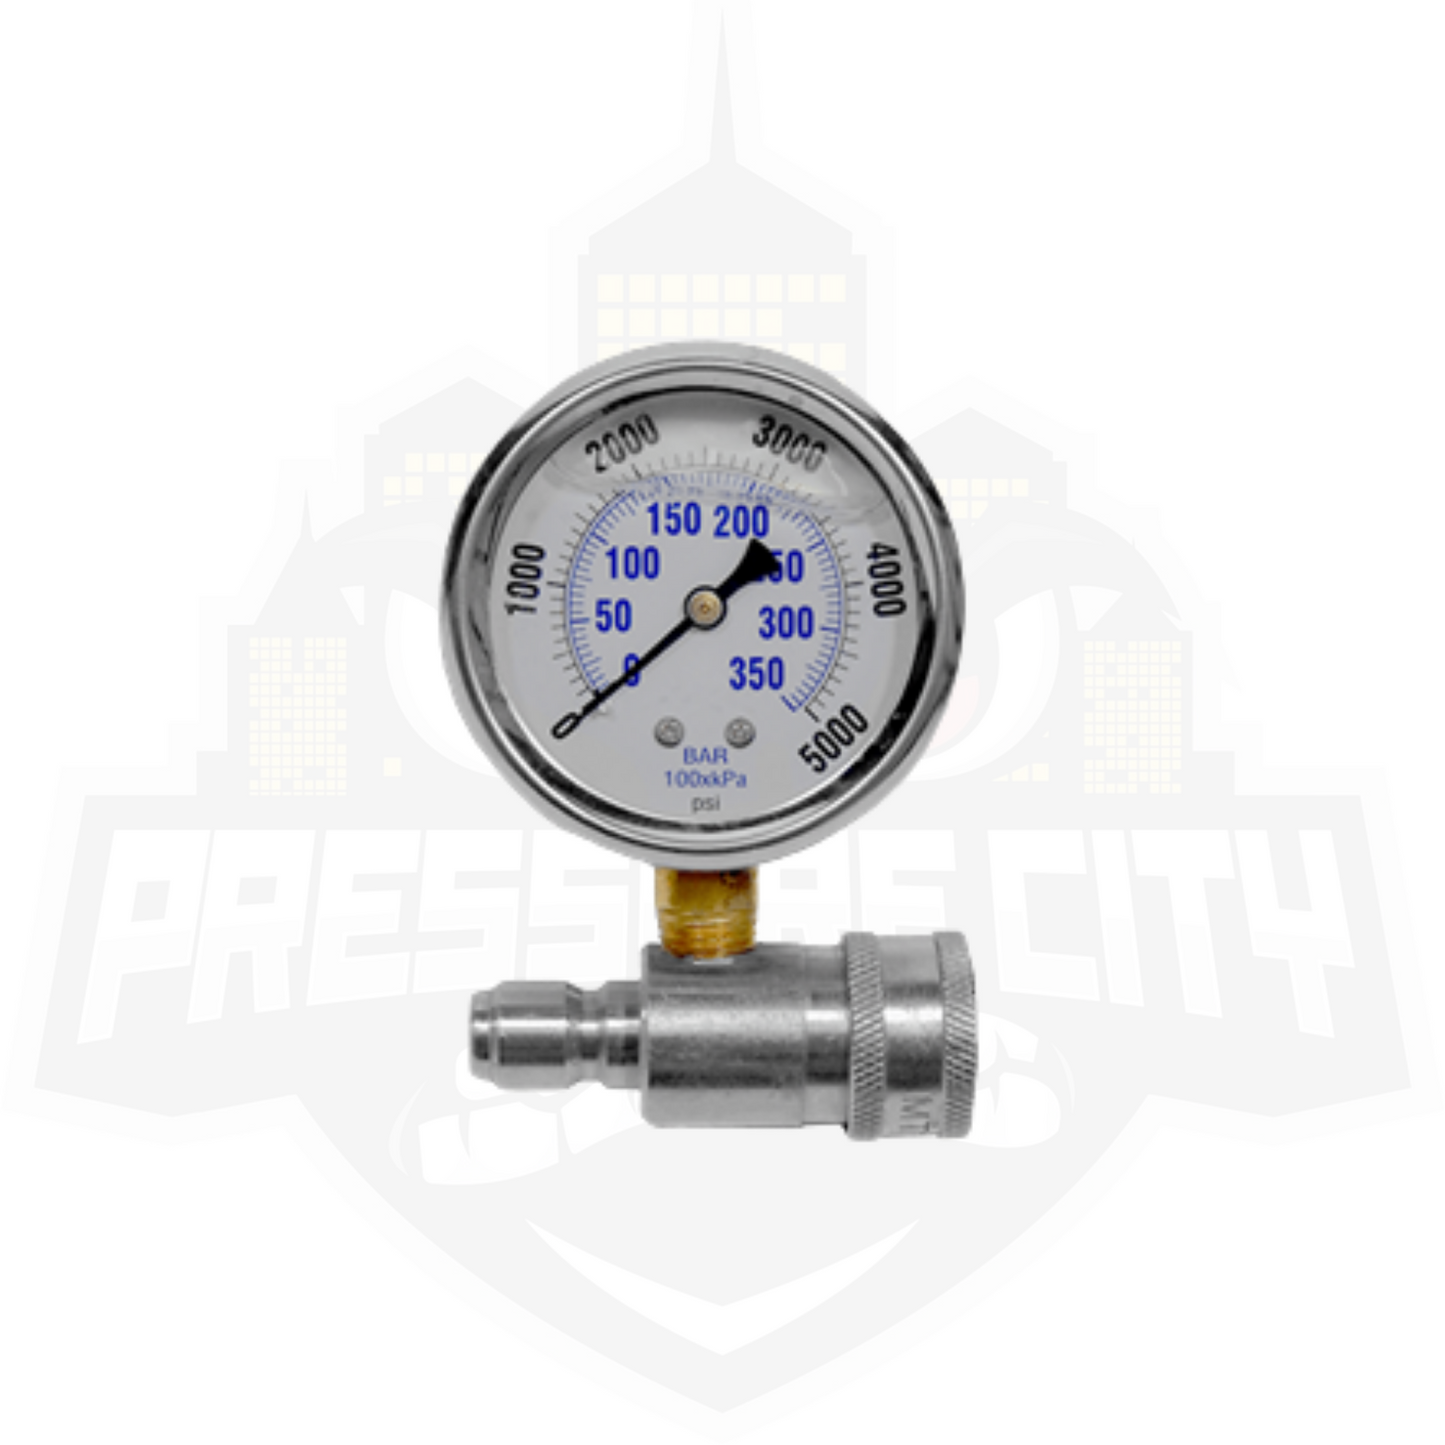 5000 PSI pressure gauge with QC